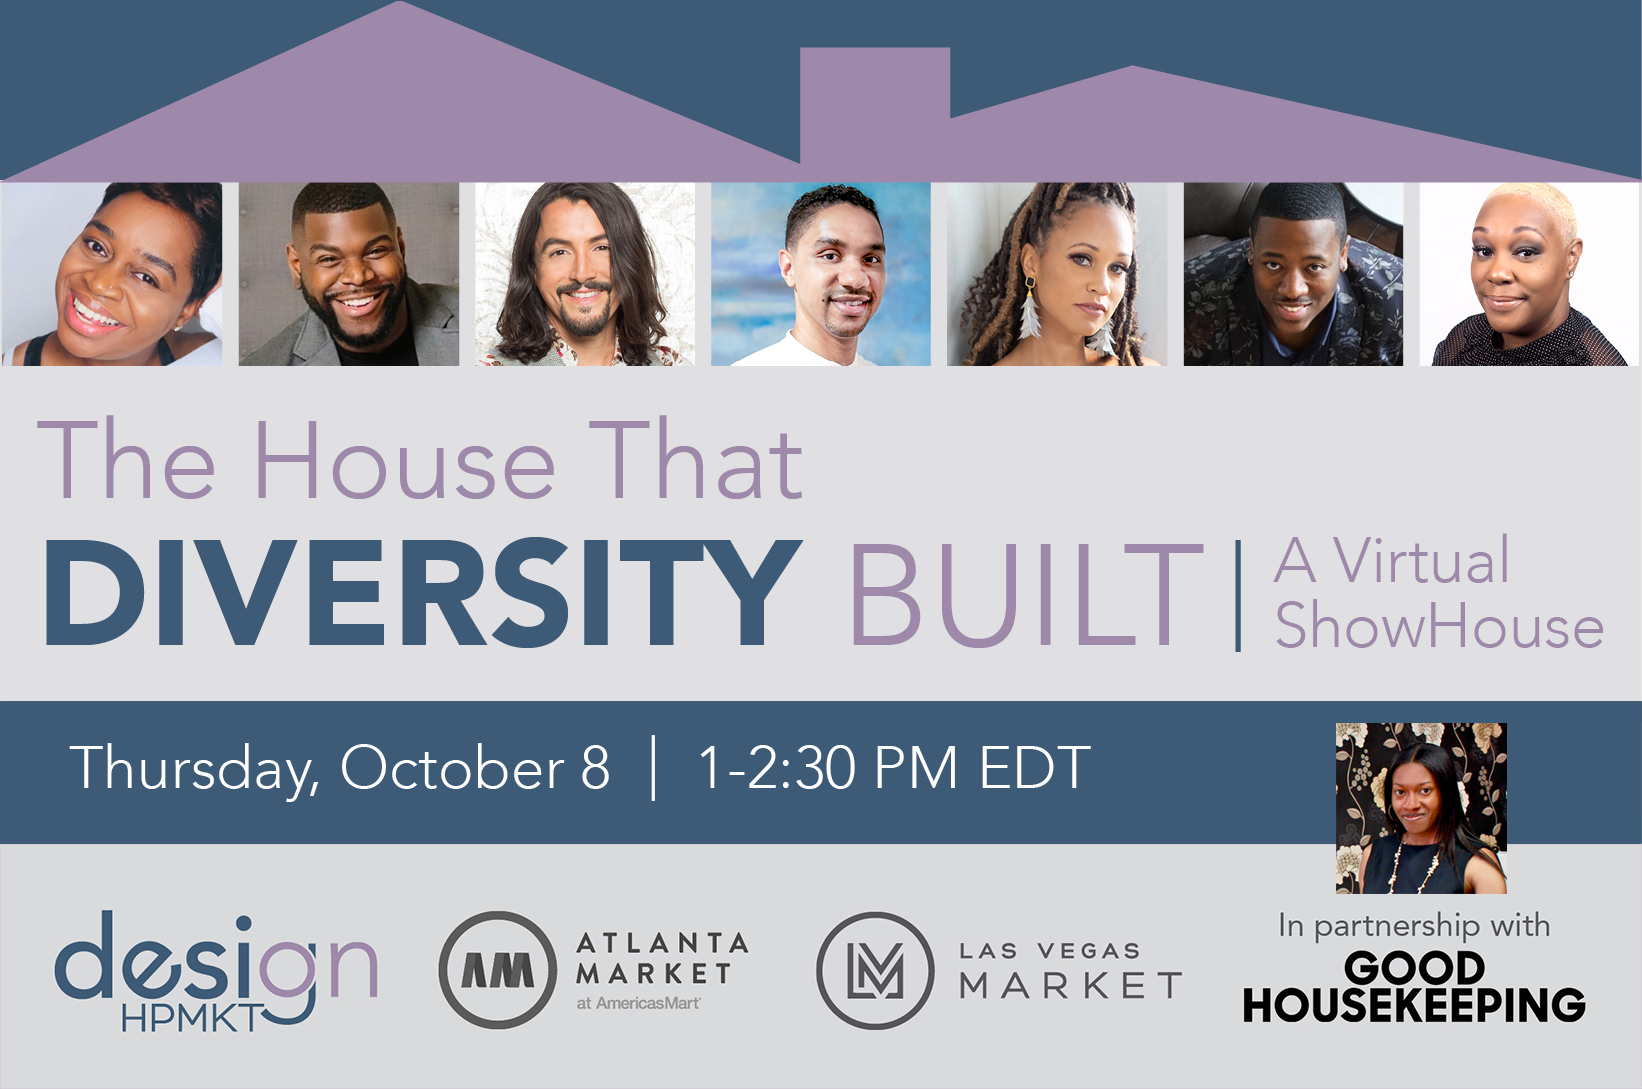 The House That Diversity Built